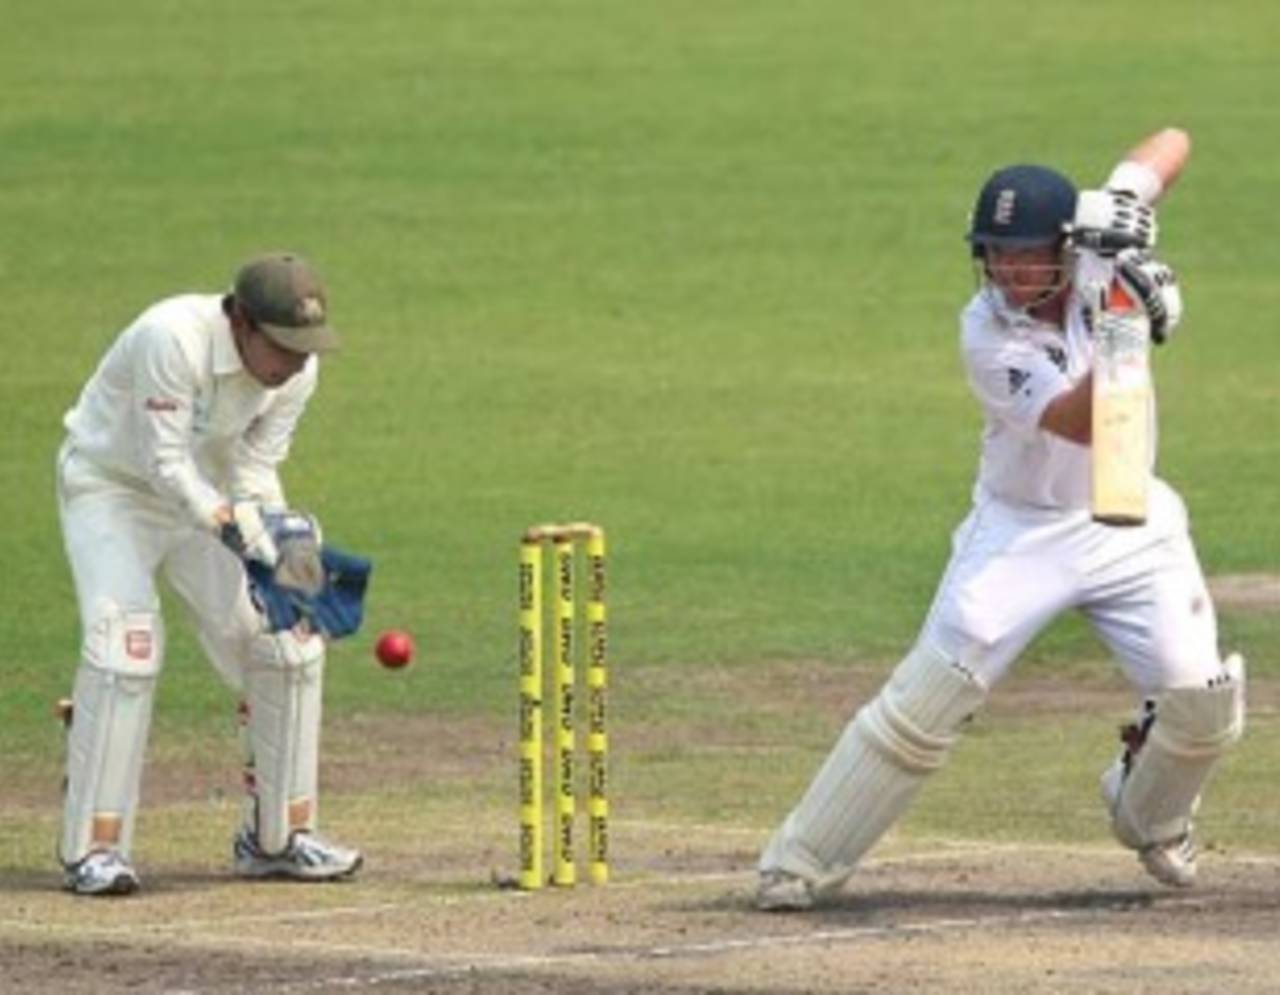 Ian Bell's hundred ensured England's solid progress, Bangladesh v England, 2nd Test, Dhaka, 3rd day, March 22, 2010